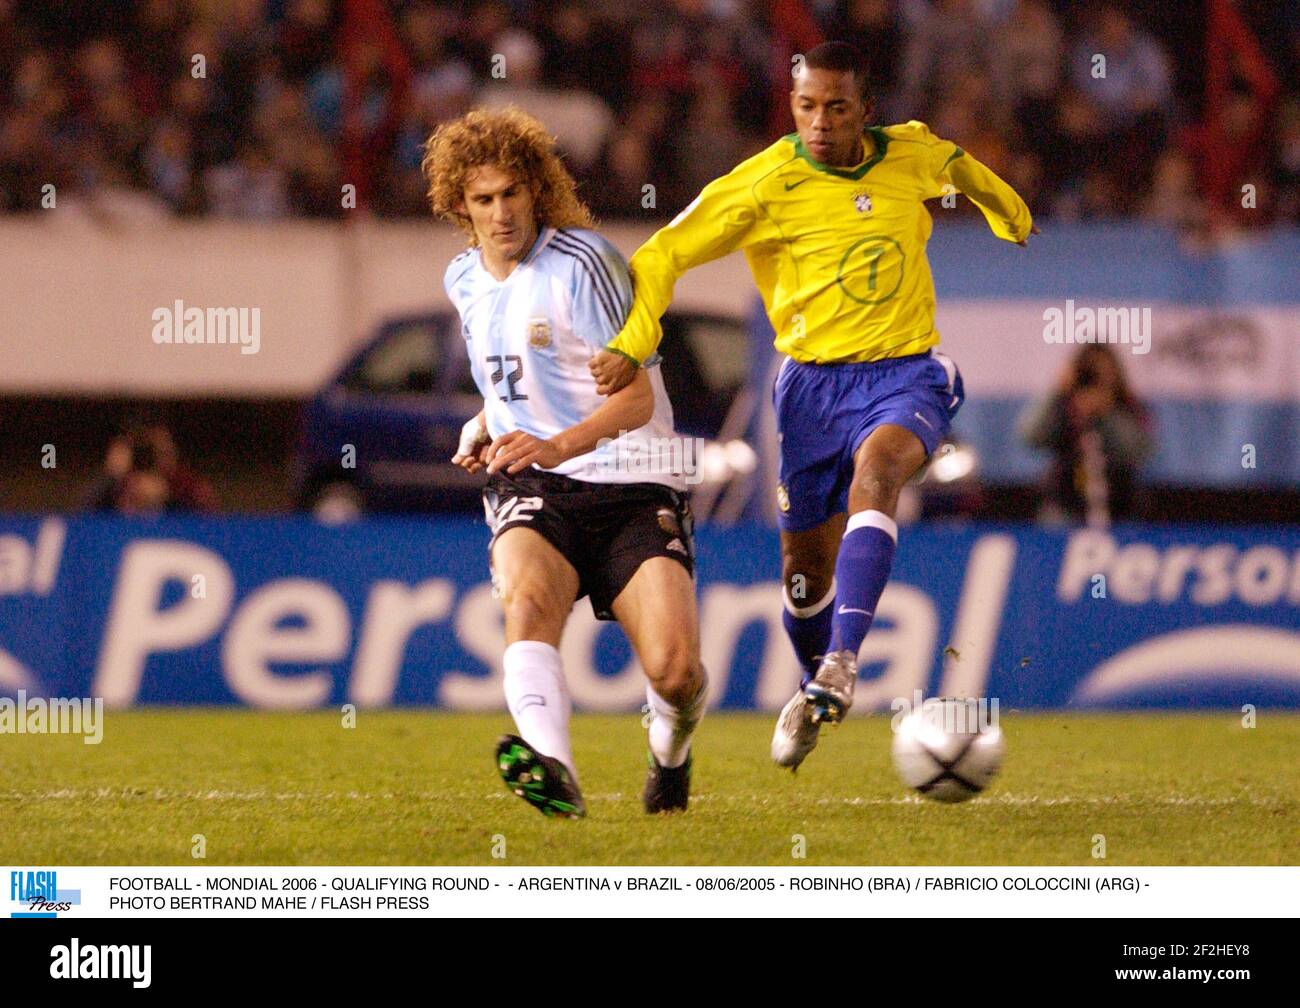 FOOTBALL - MONDIAL 2006 - QUALIFYING ROUND - - ARGENTINA v BRAZIL - 08/06/2005 - ROBINHO (BRA) / FABRICIO COLOCCINI (ARG) - PHOTO BERTRAND MAHE / FLASH PRESS Stock Photo